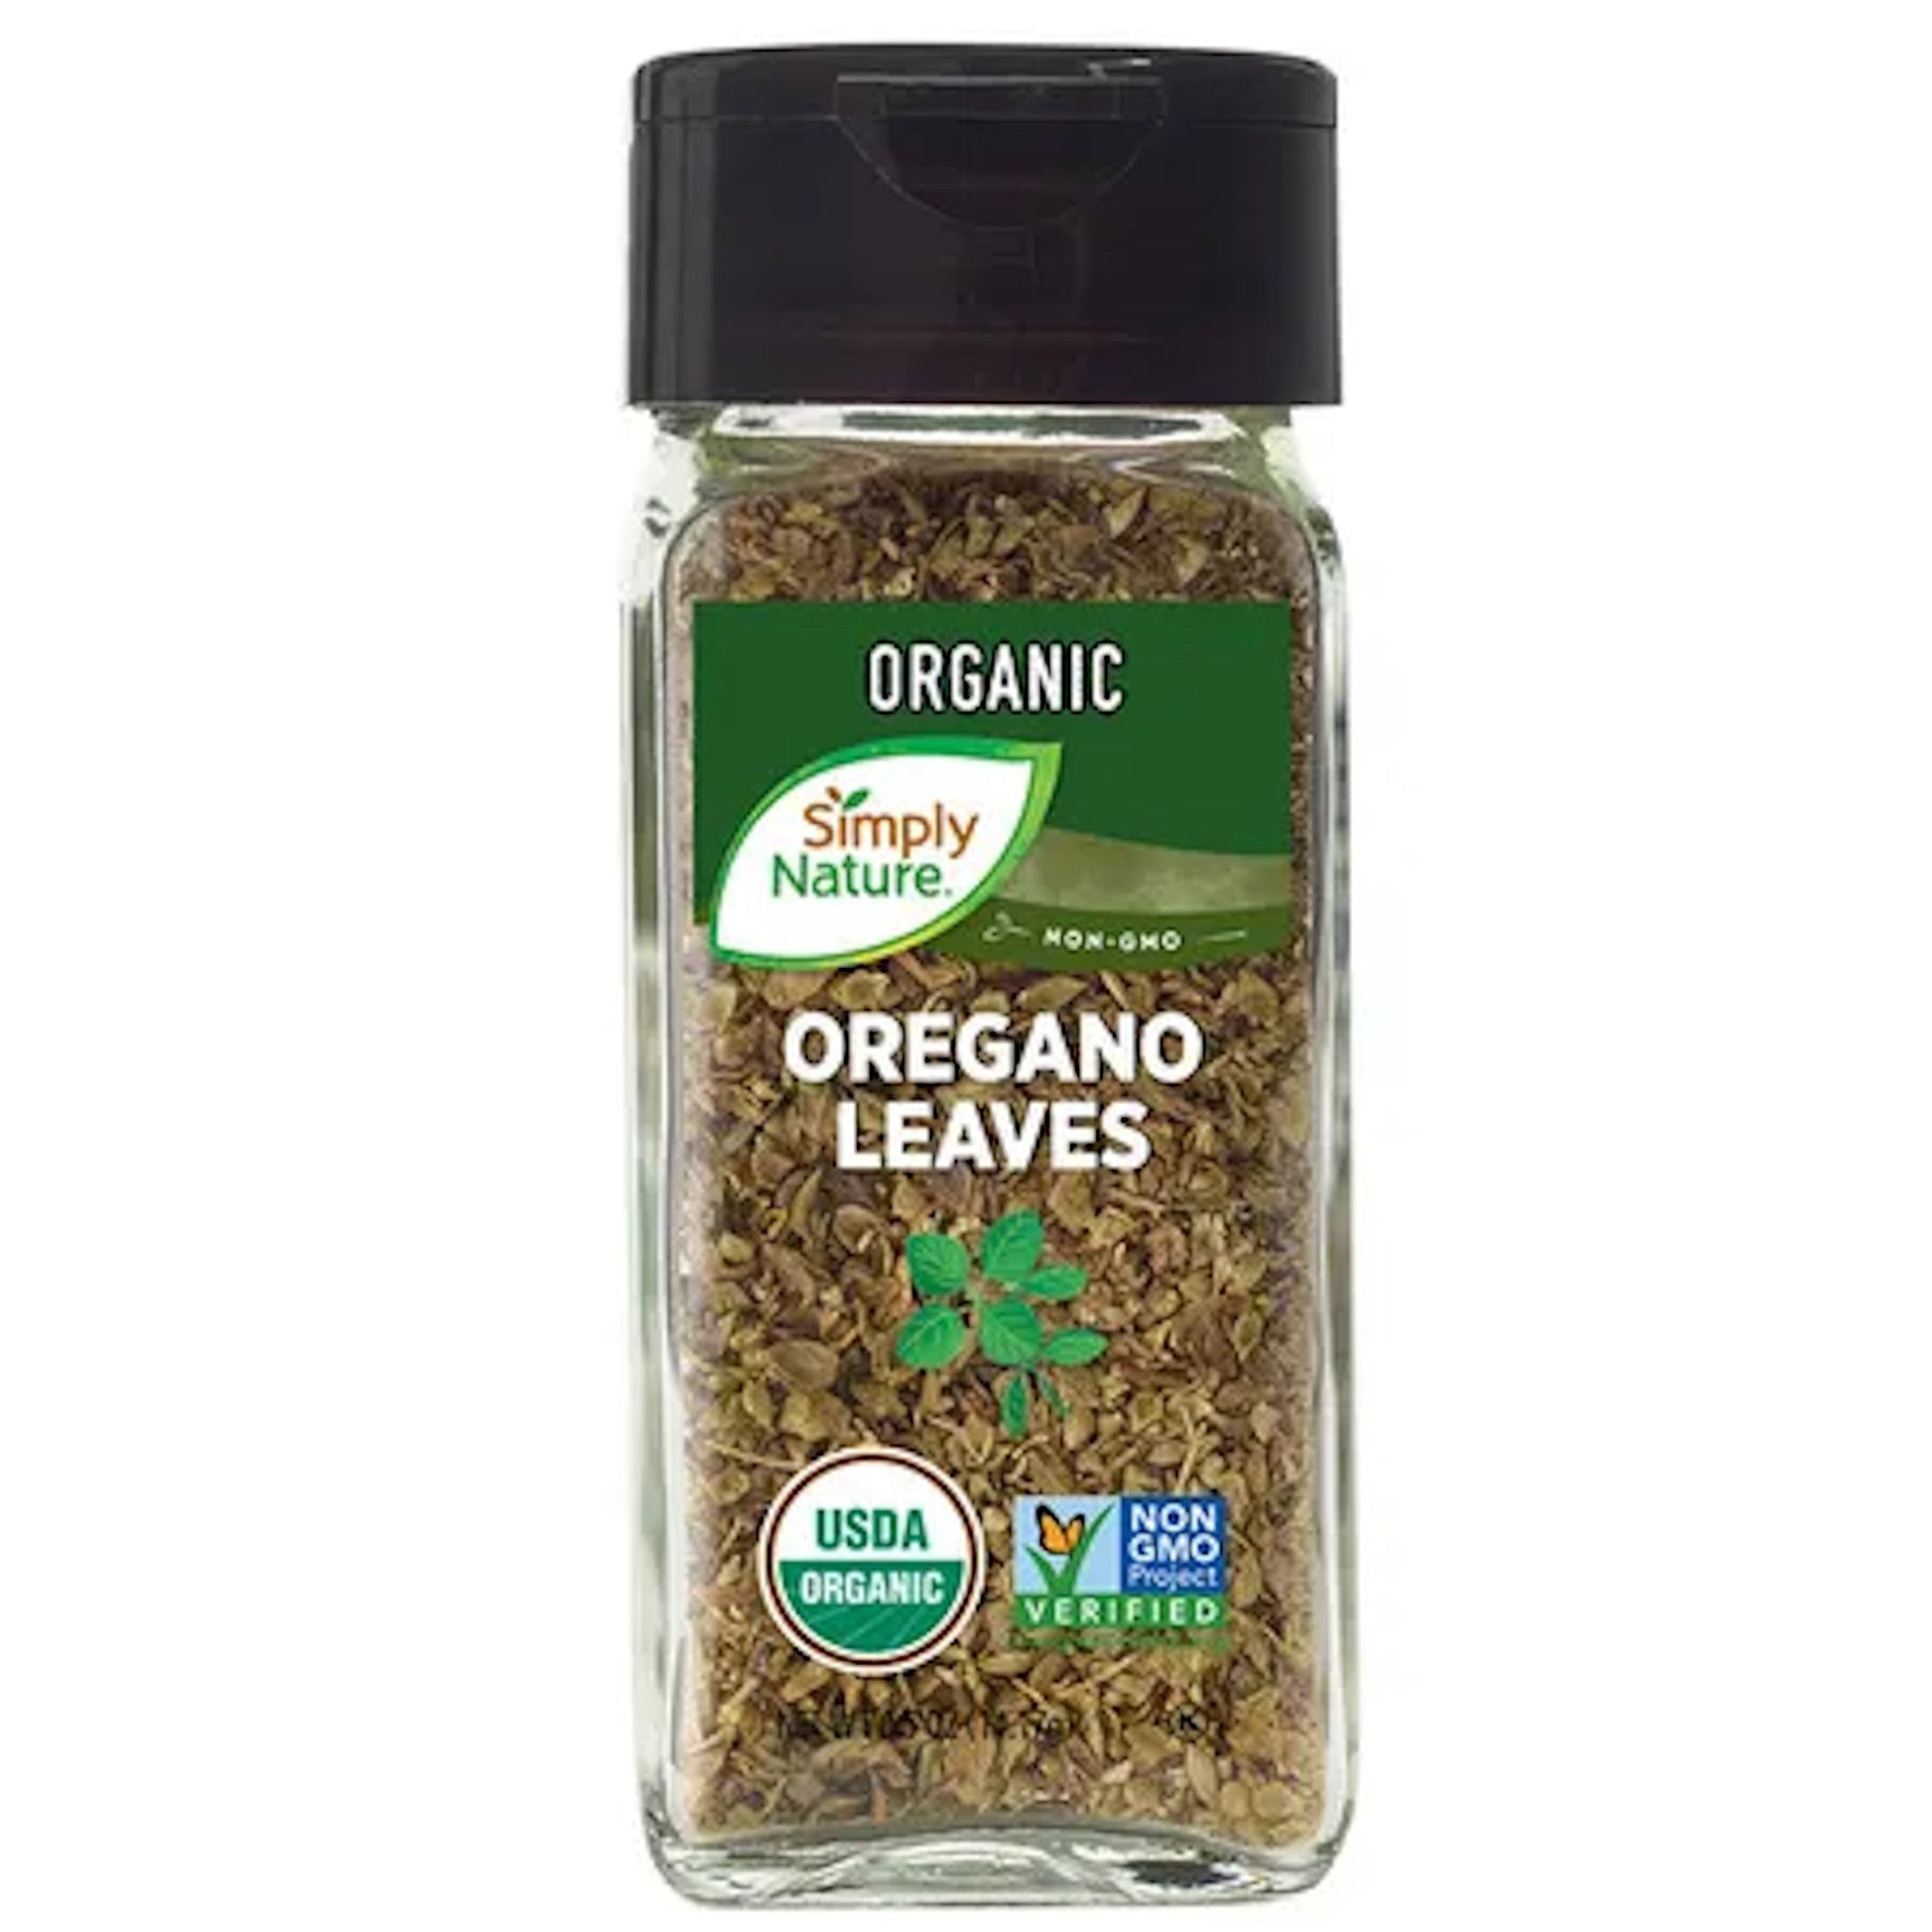 Simply Nature Organic Ground Oregano Leaves 0.5 oz - FlavorKicker.com